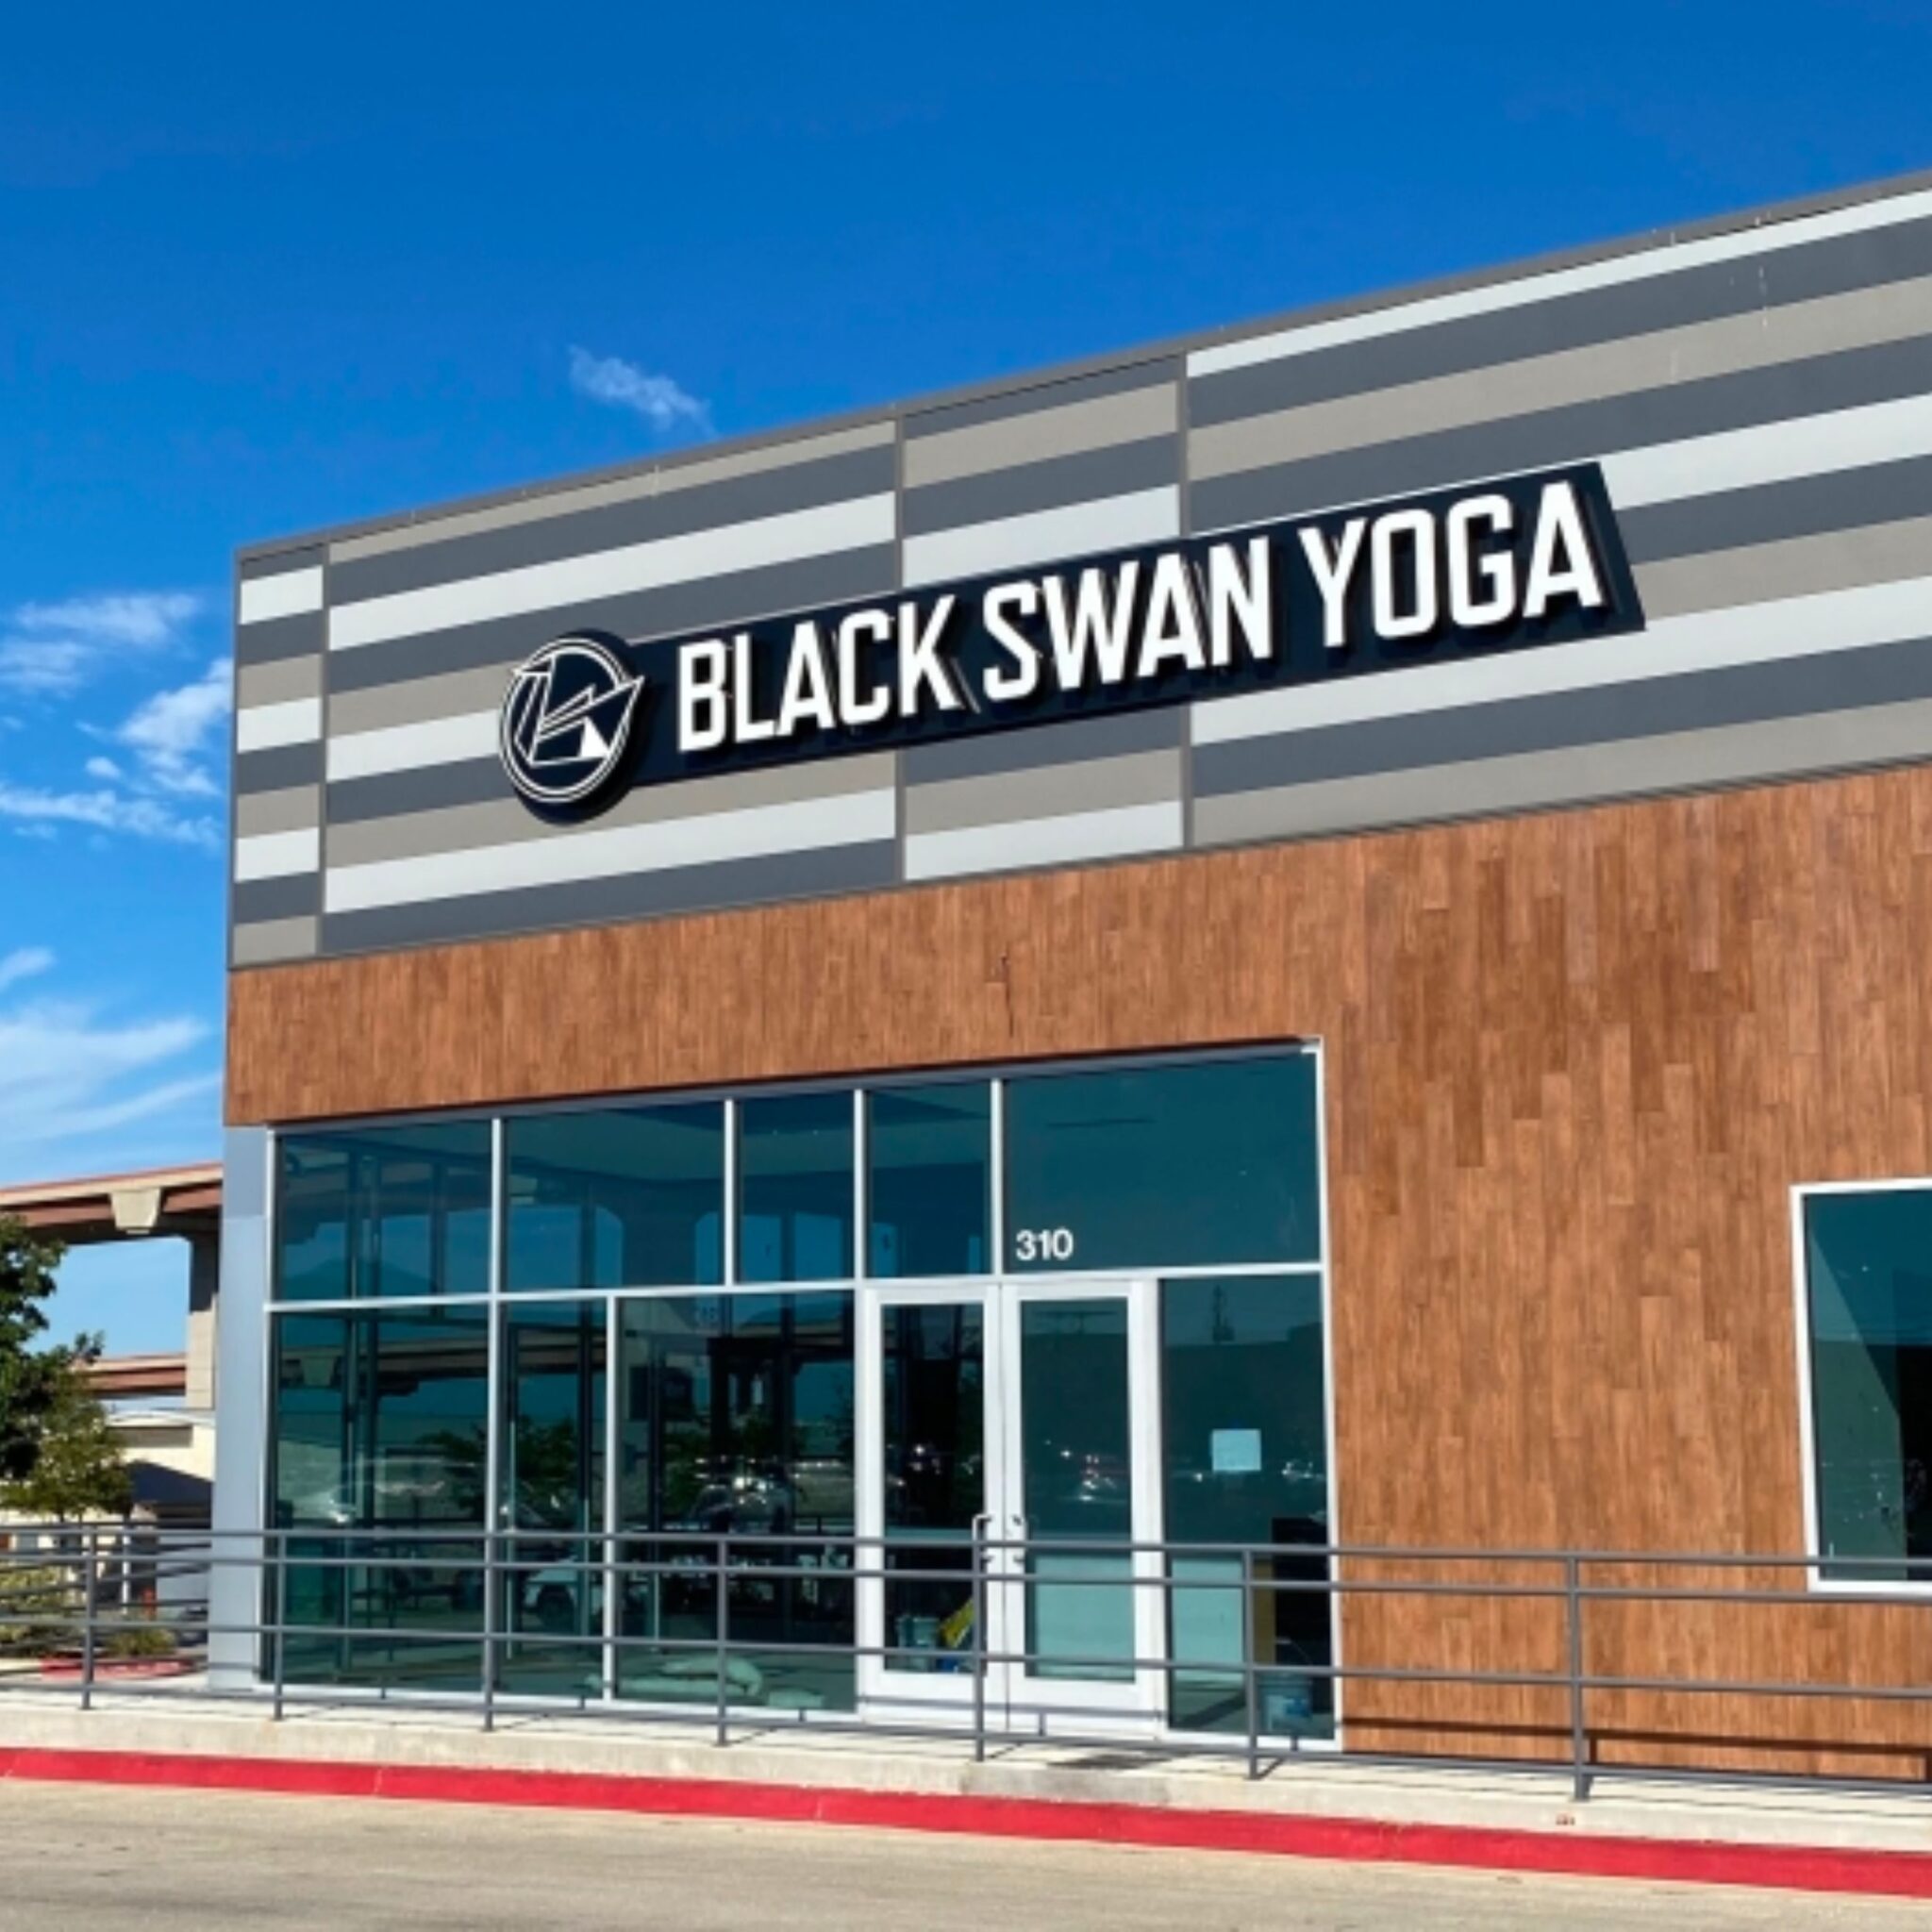 Black Swan Yoga in Round Rock, Texas